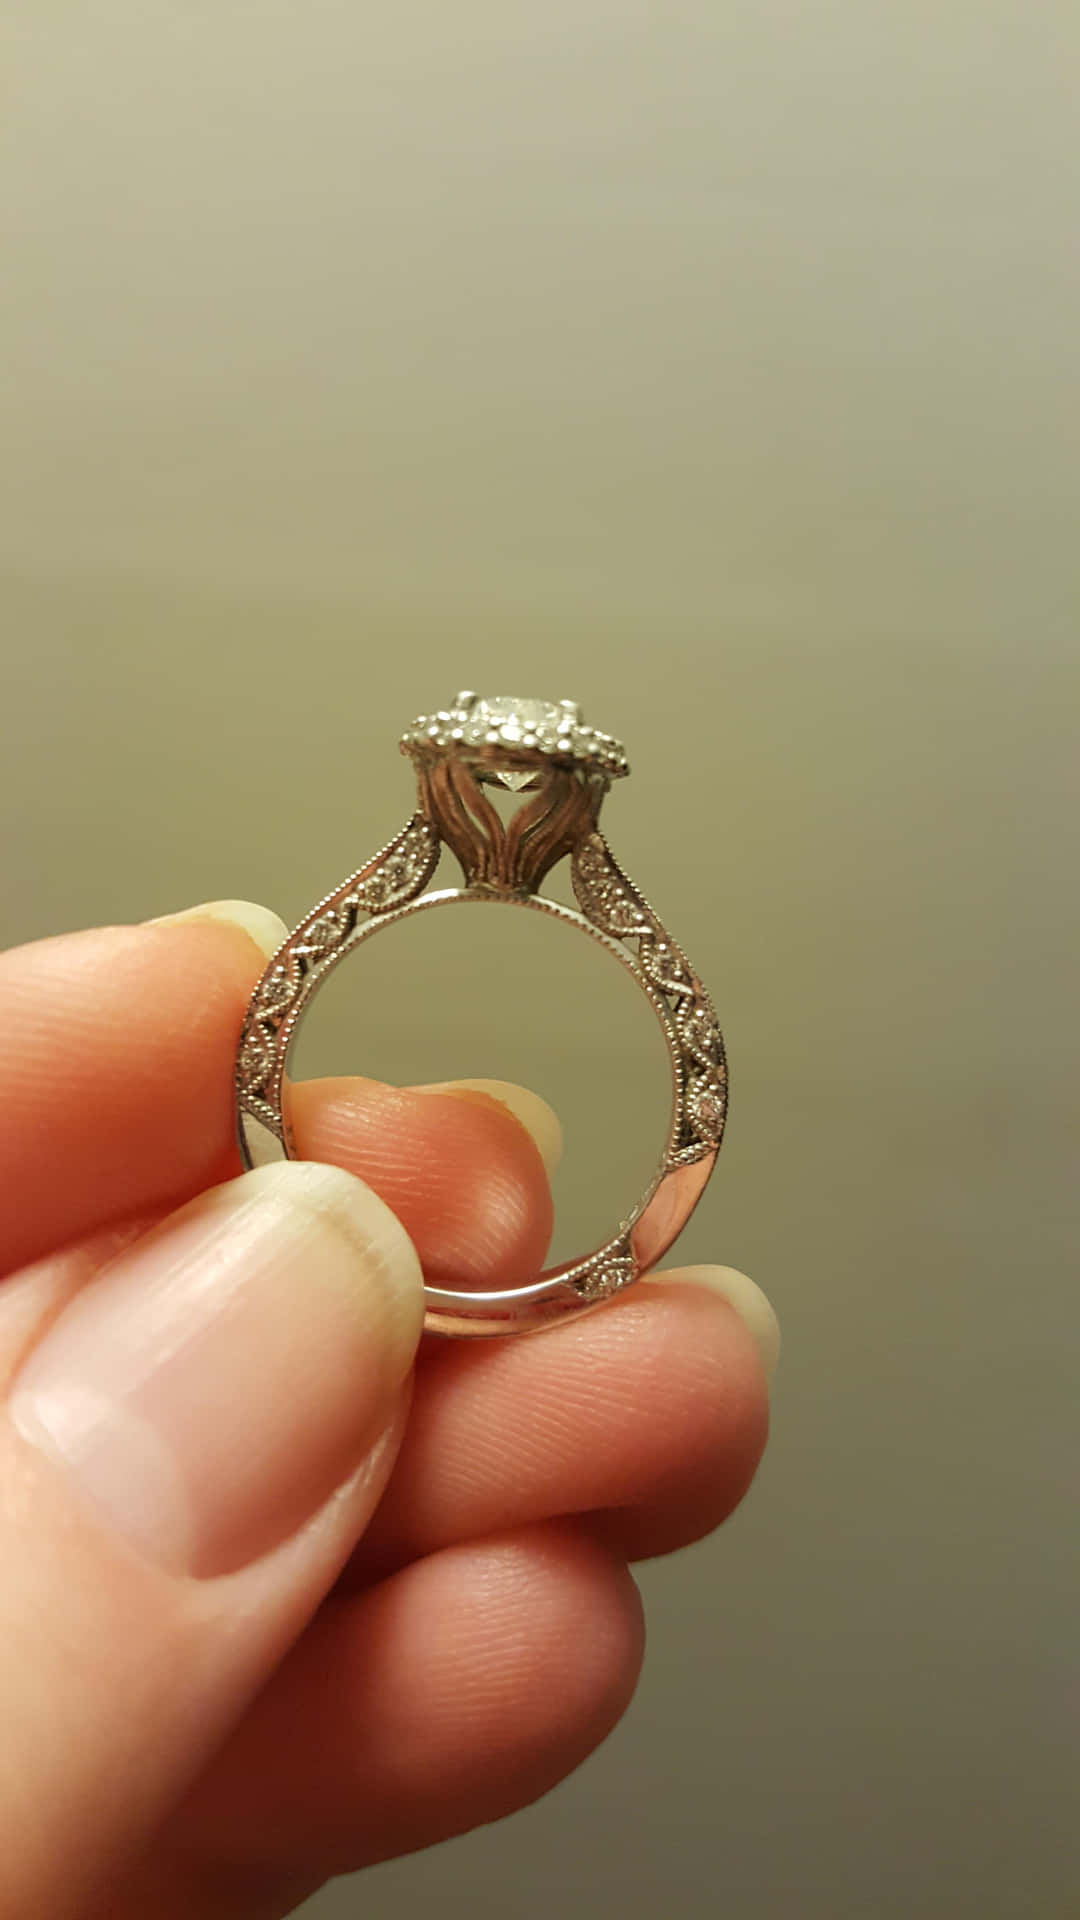 A stunning diamond engagement ring placed elegantly